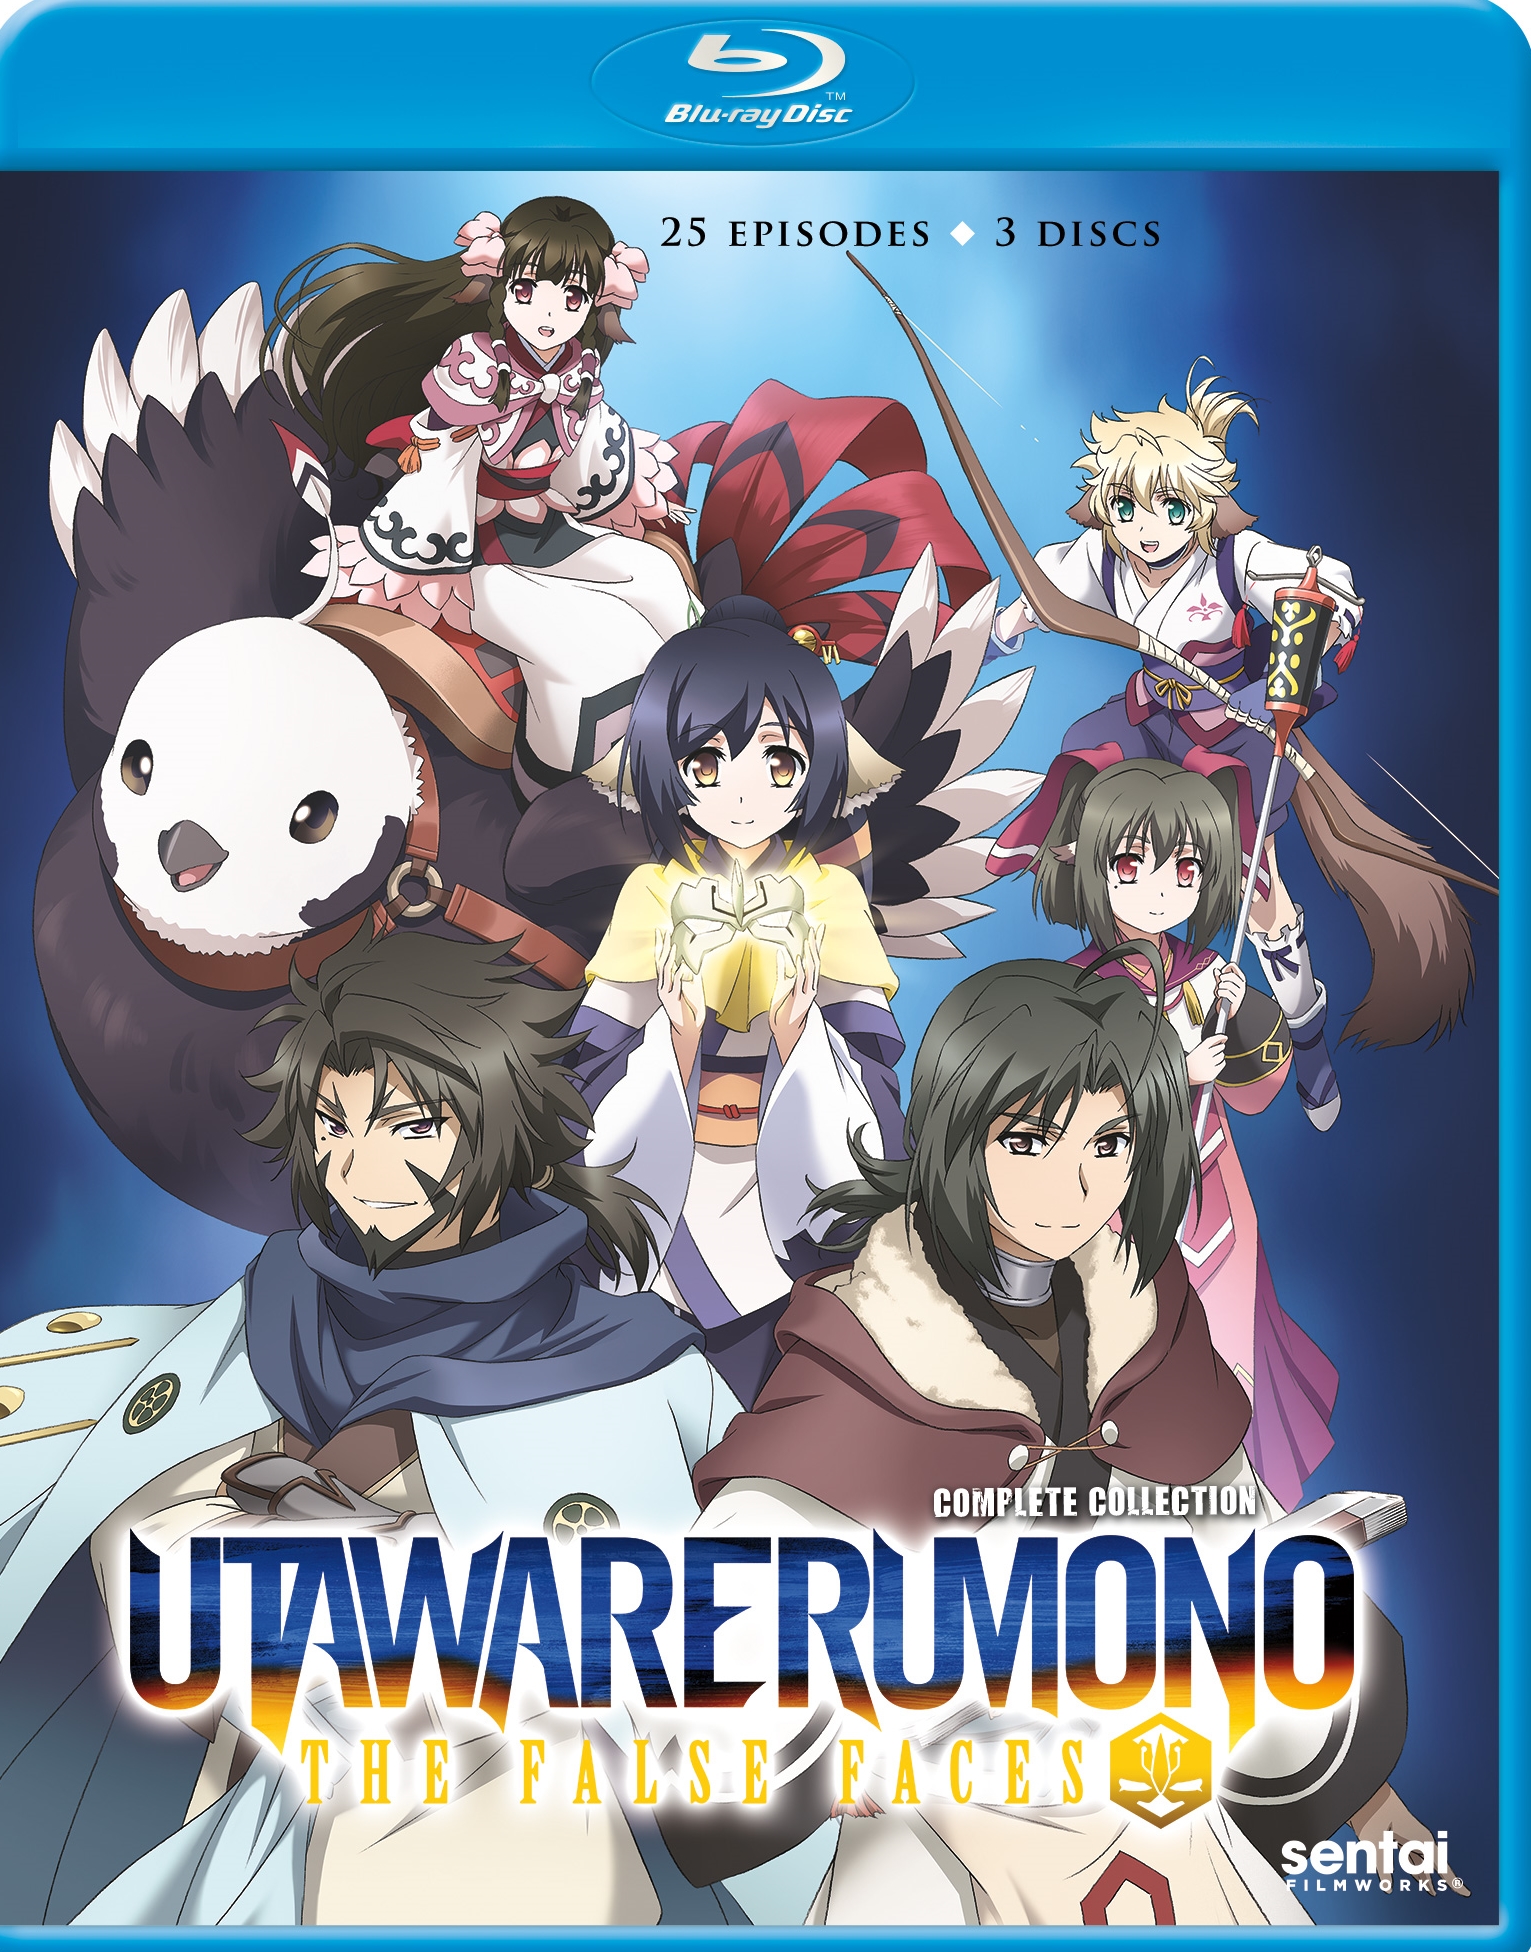 Utawarerumono: False Mask Premium Edition and first-print bonuses detailed  - Gematsu